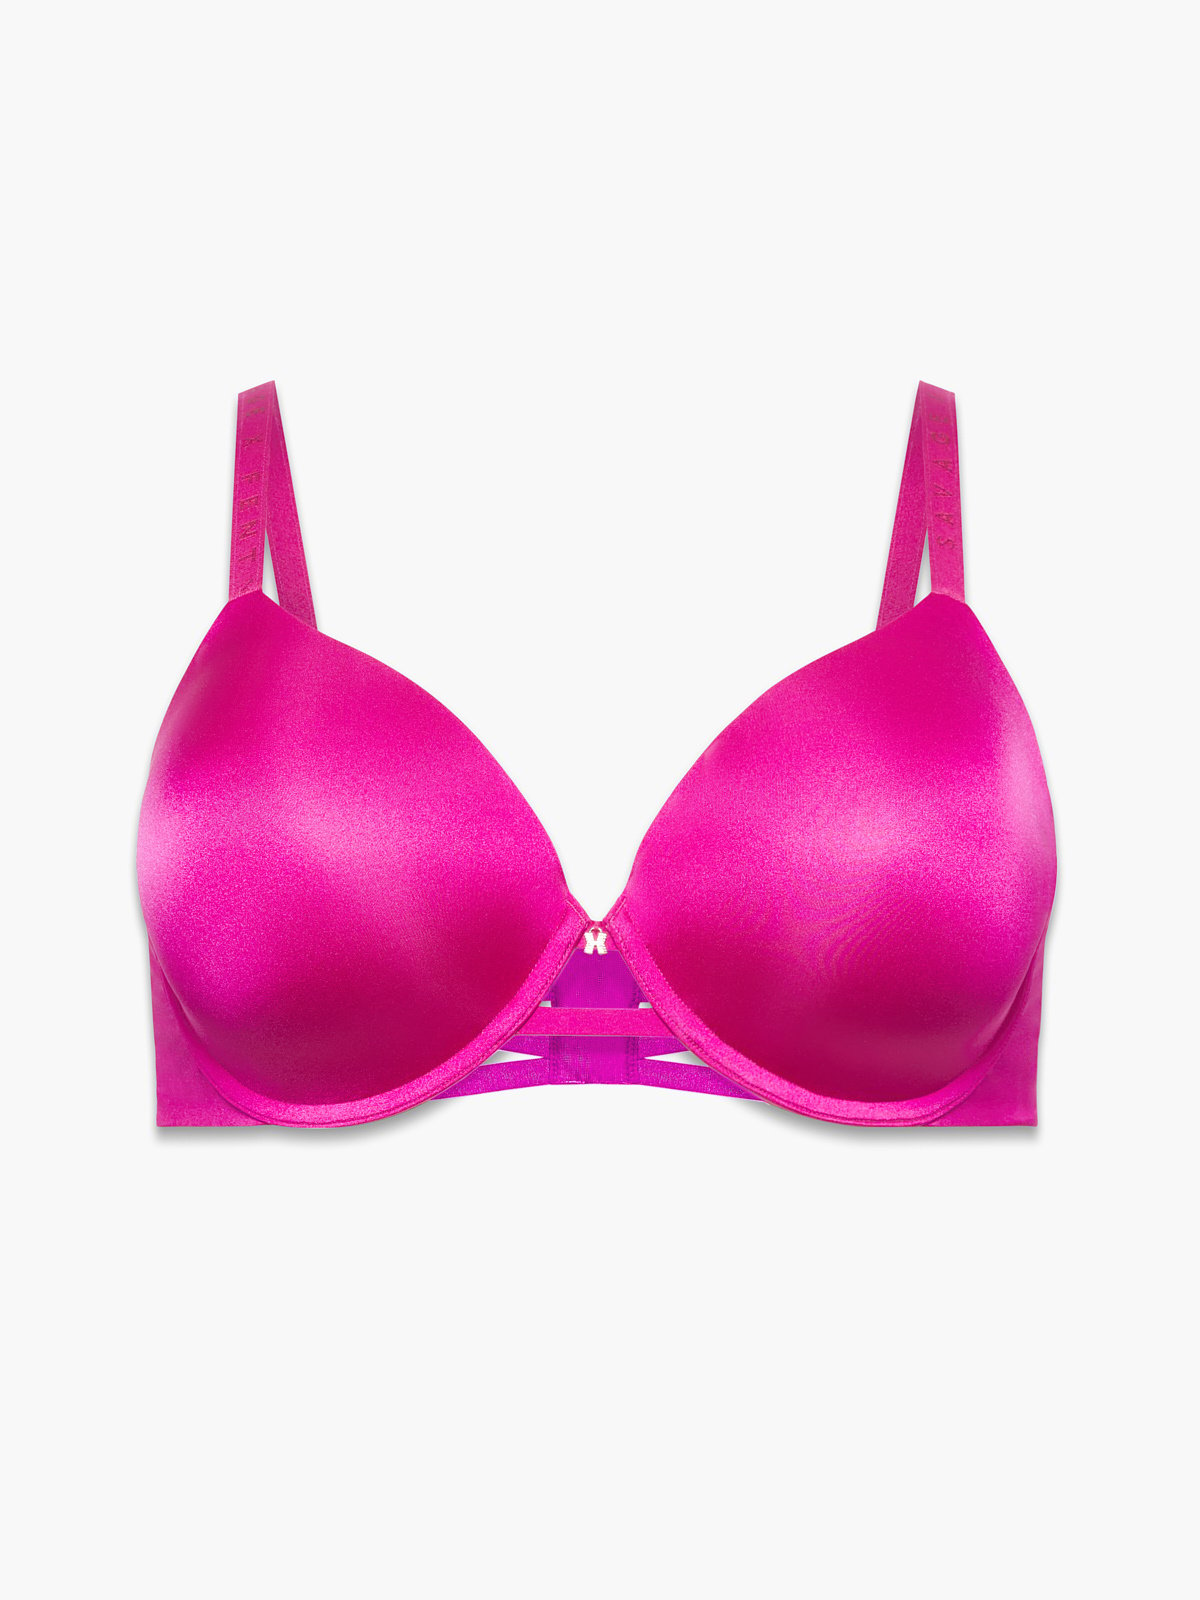 Buy Bwitch Neon Pink T Shirt Bra BW228 - Bra for Women 361074